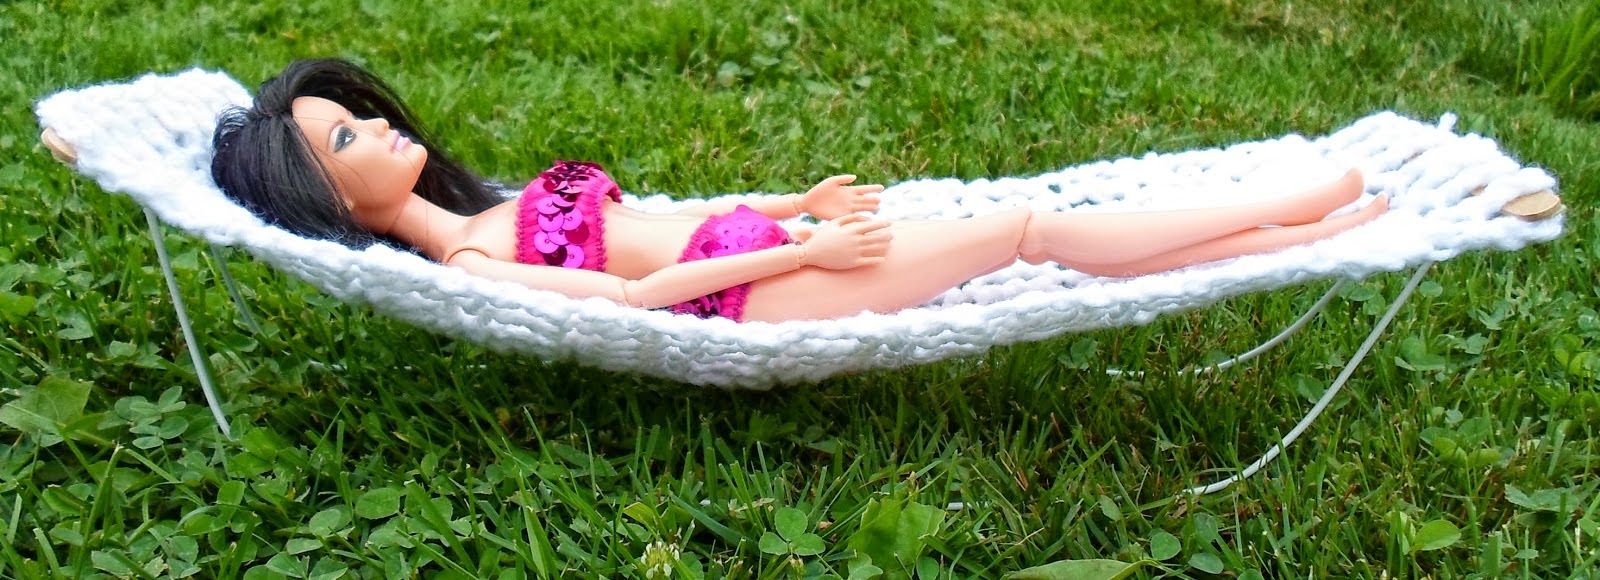 http://happierthanapiginmud.blogspot.com/2014/08/barbie-hammock-from-hanger-popsicle.html